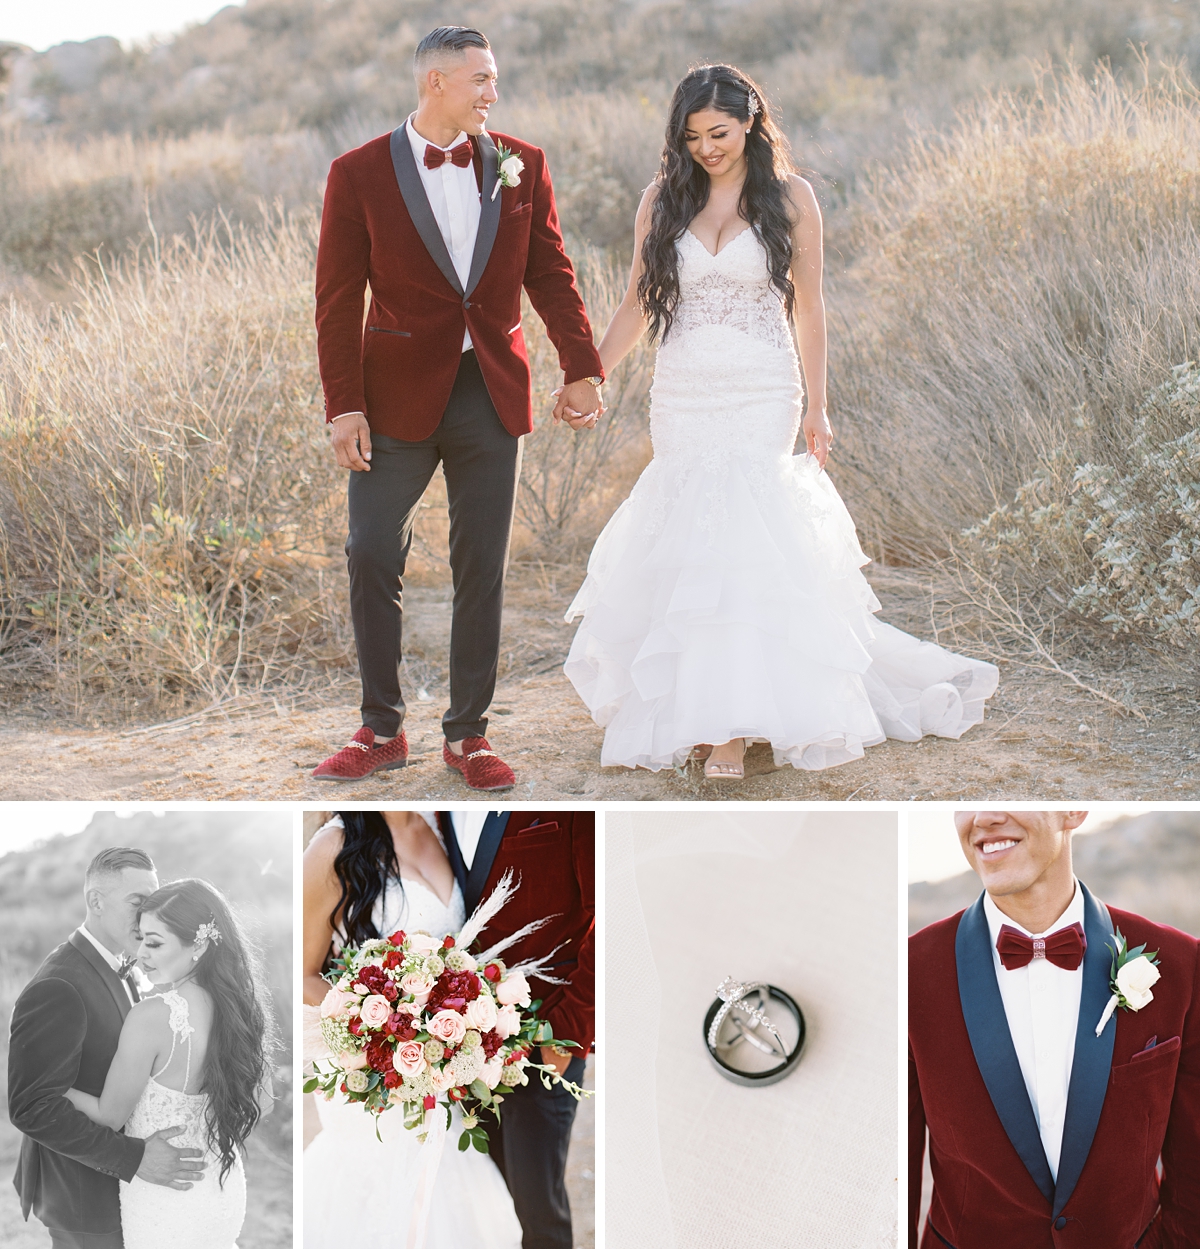 Moreno Valley Wedding at Private Home - San Diego Wedding Photographer